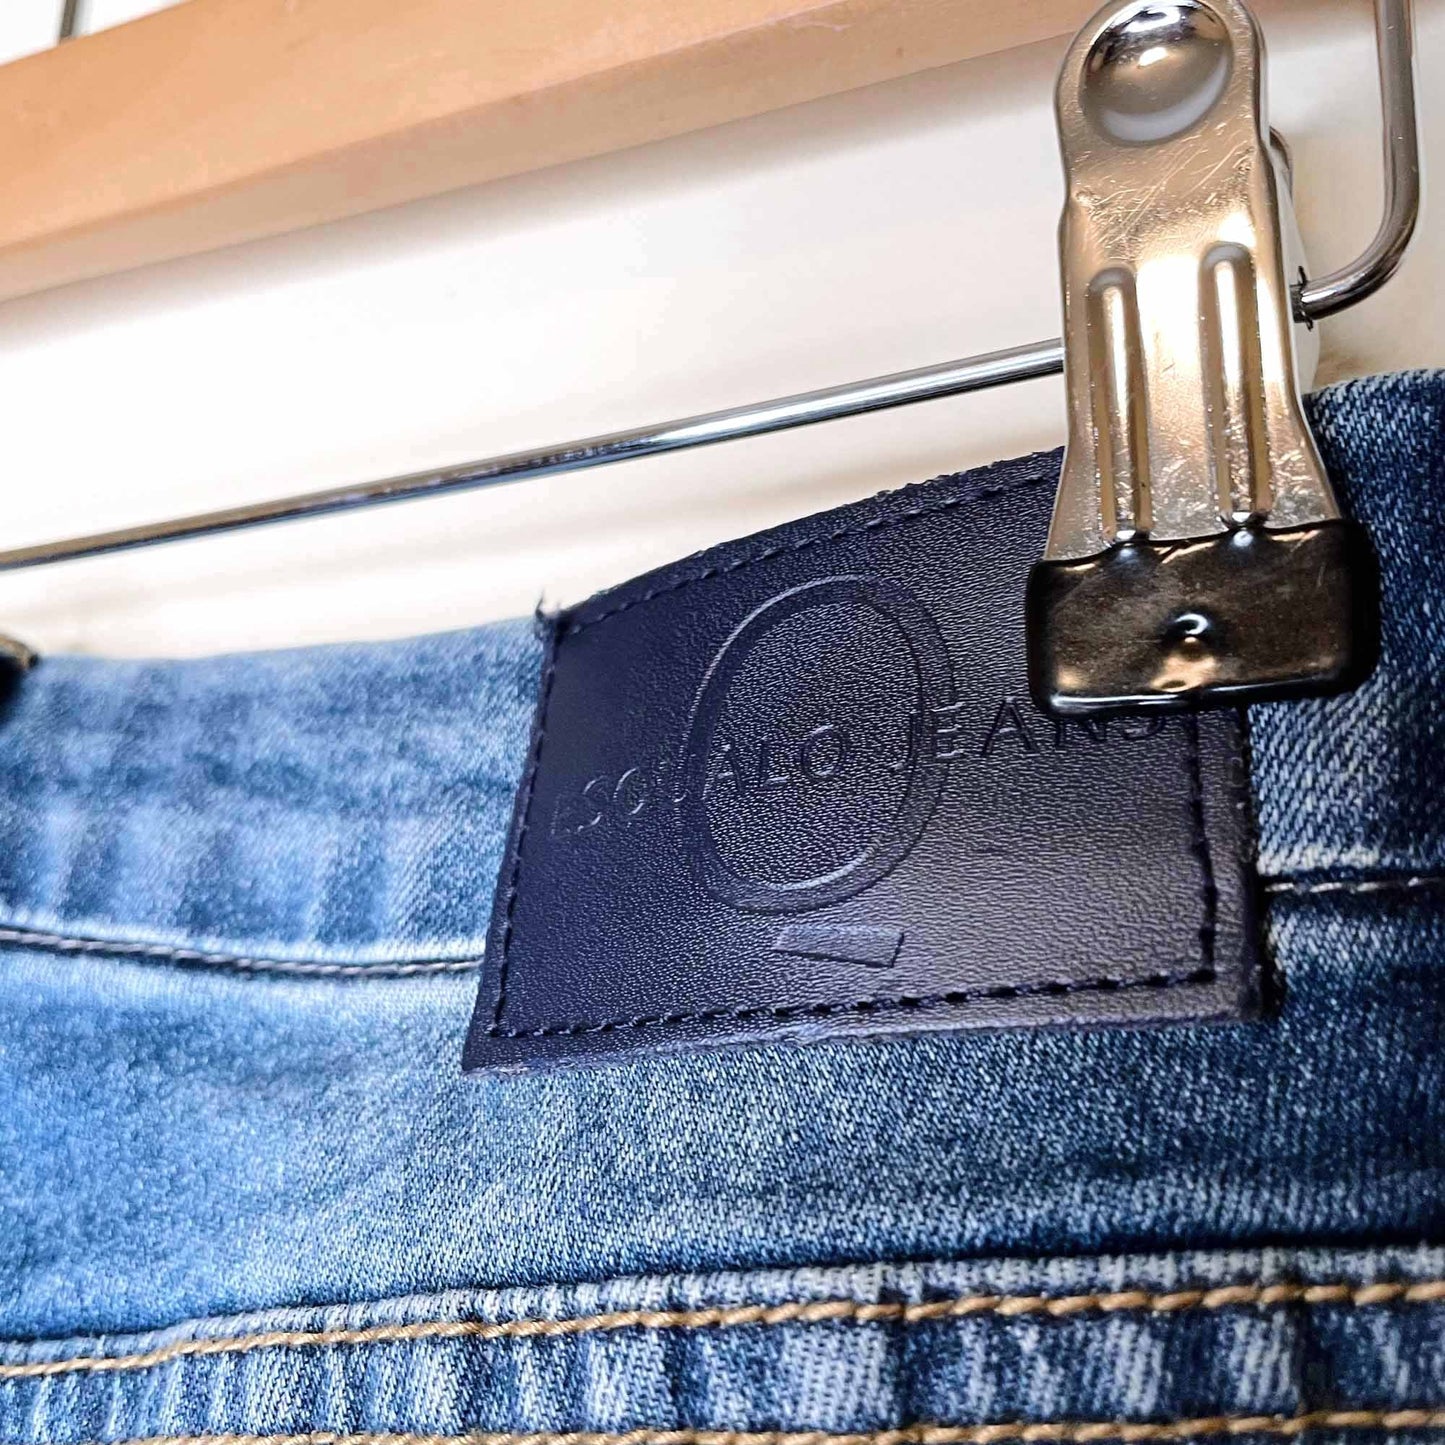 esqualo retro flare leg panel two-toned jeans - size 12